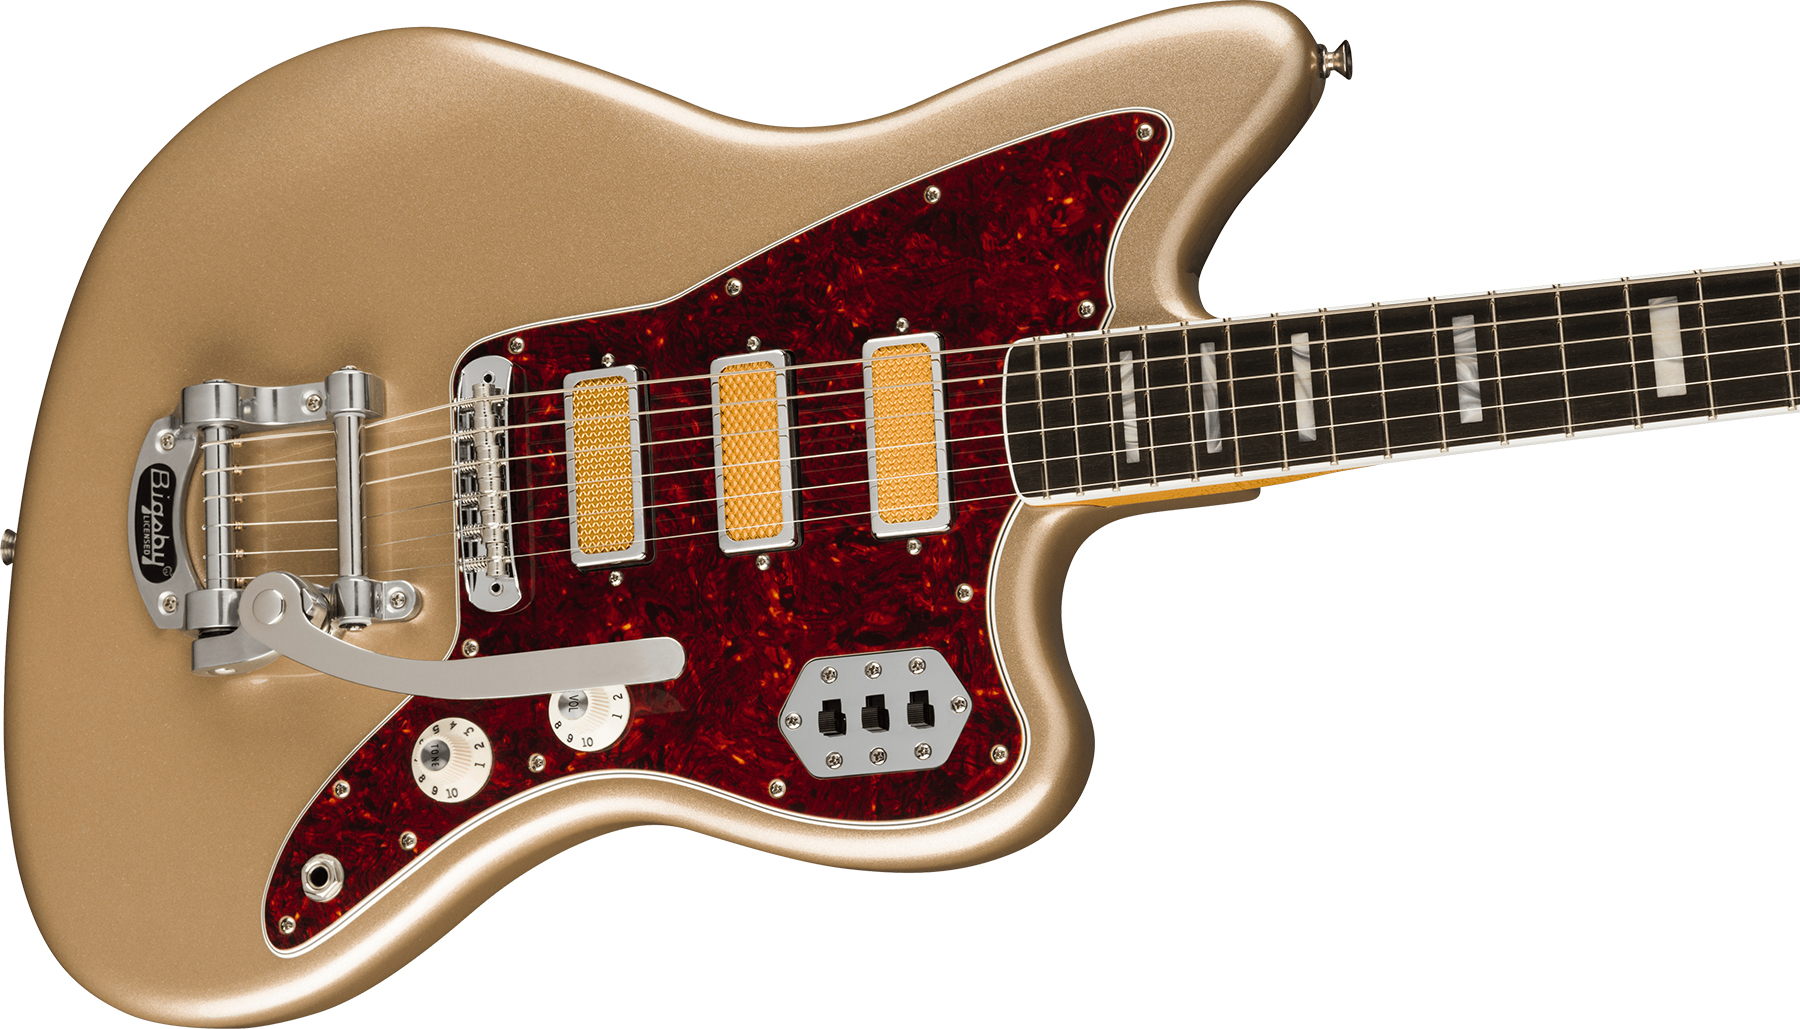 Fender Jazzmaster Gold Foil Ltd Mex 3mh Trem Bigsby Eb - Shoreline Gold - Retro-rock elektrische gitaar - Variation 2